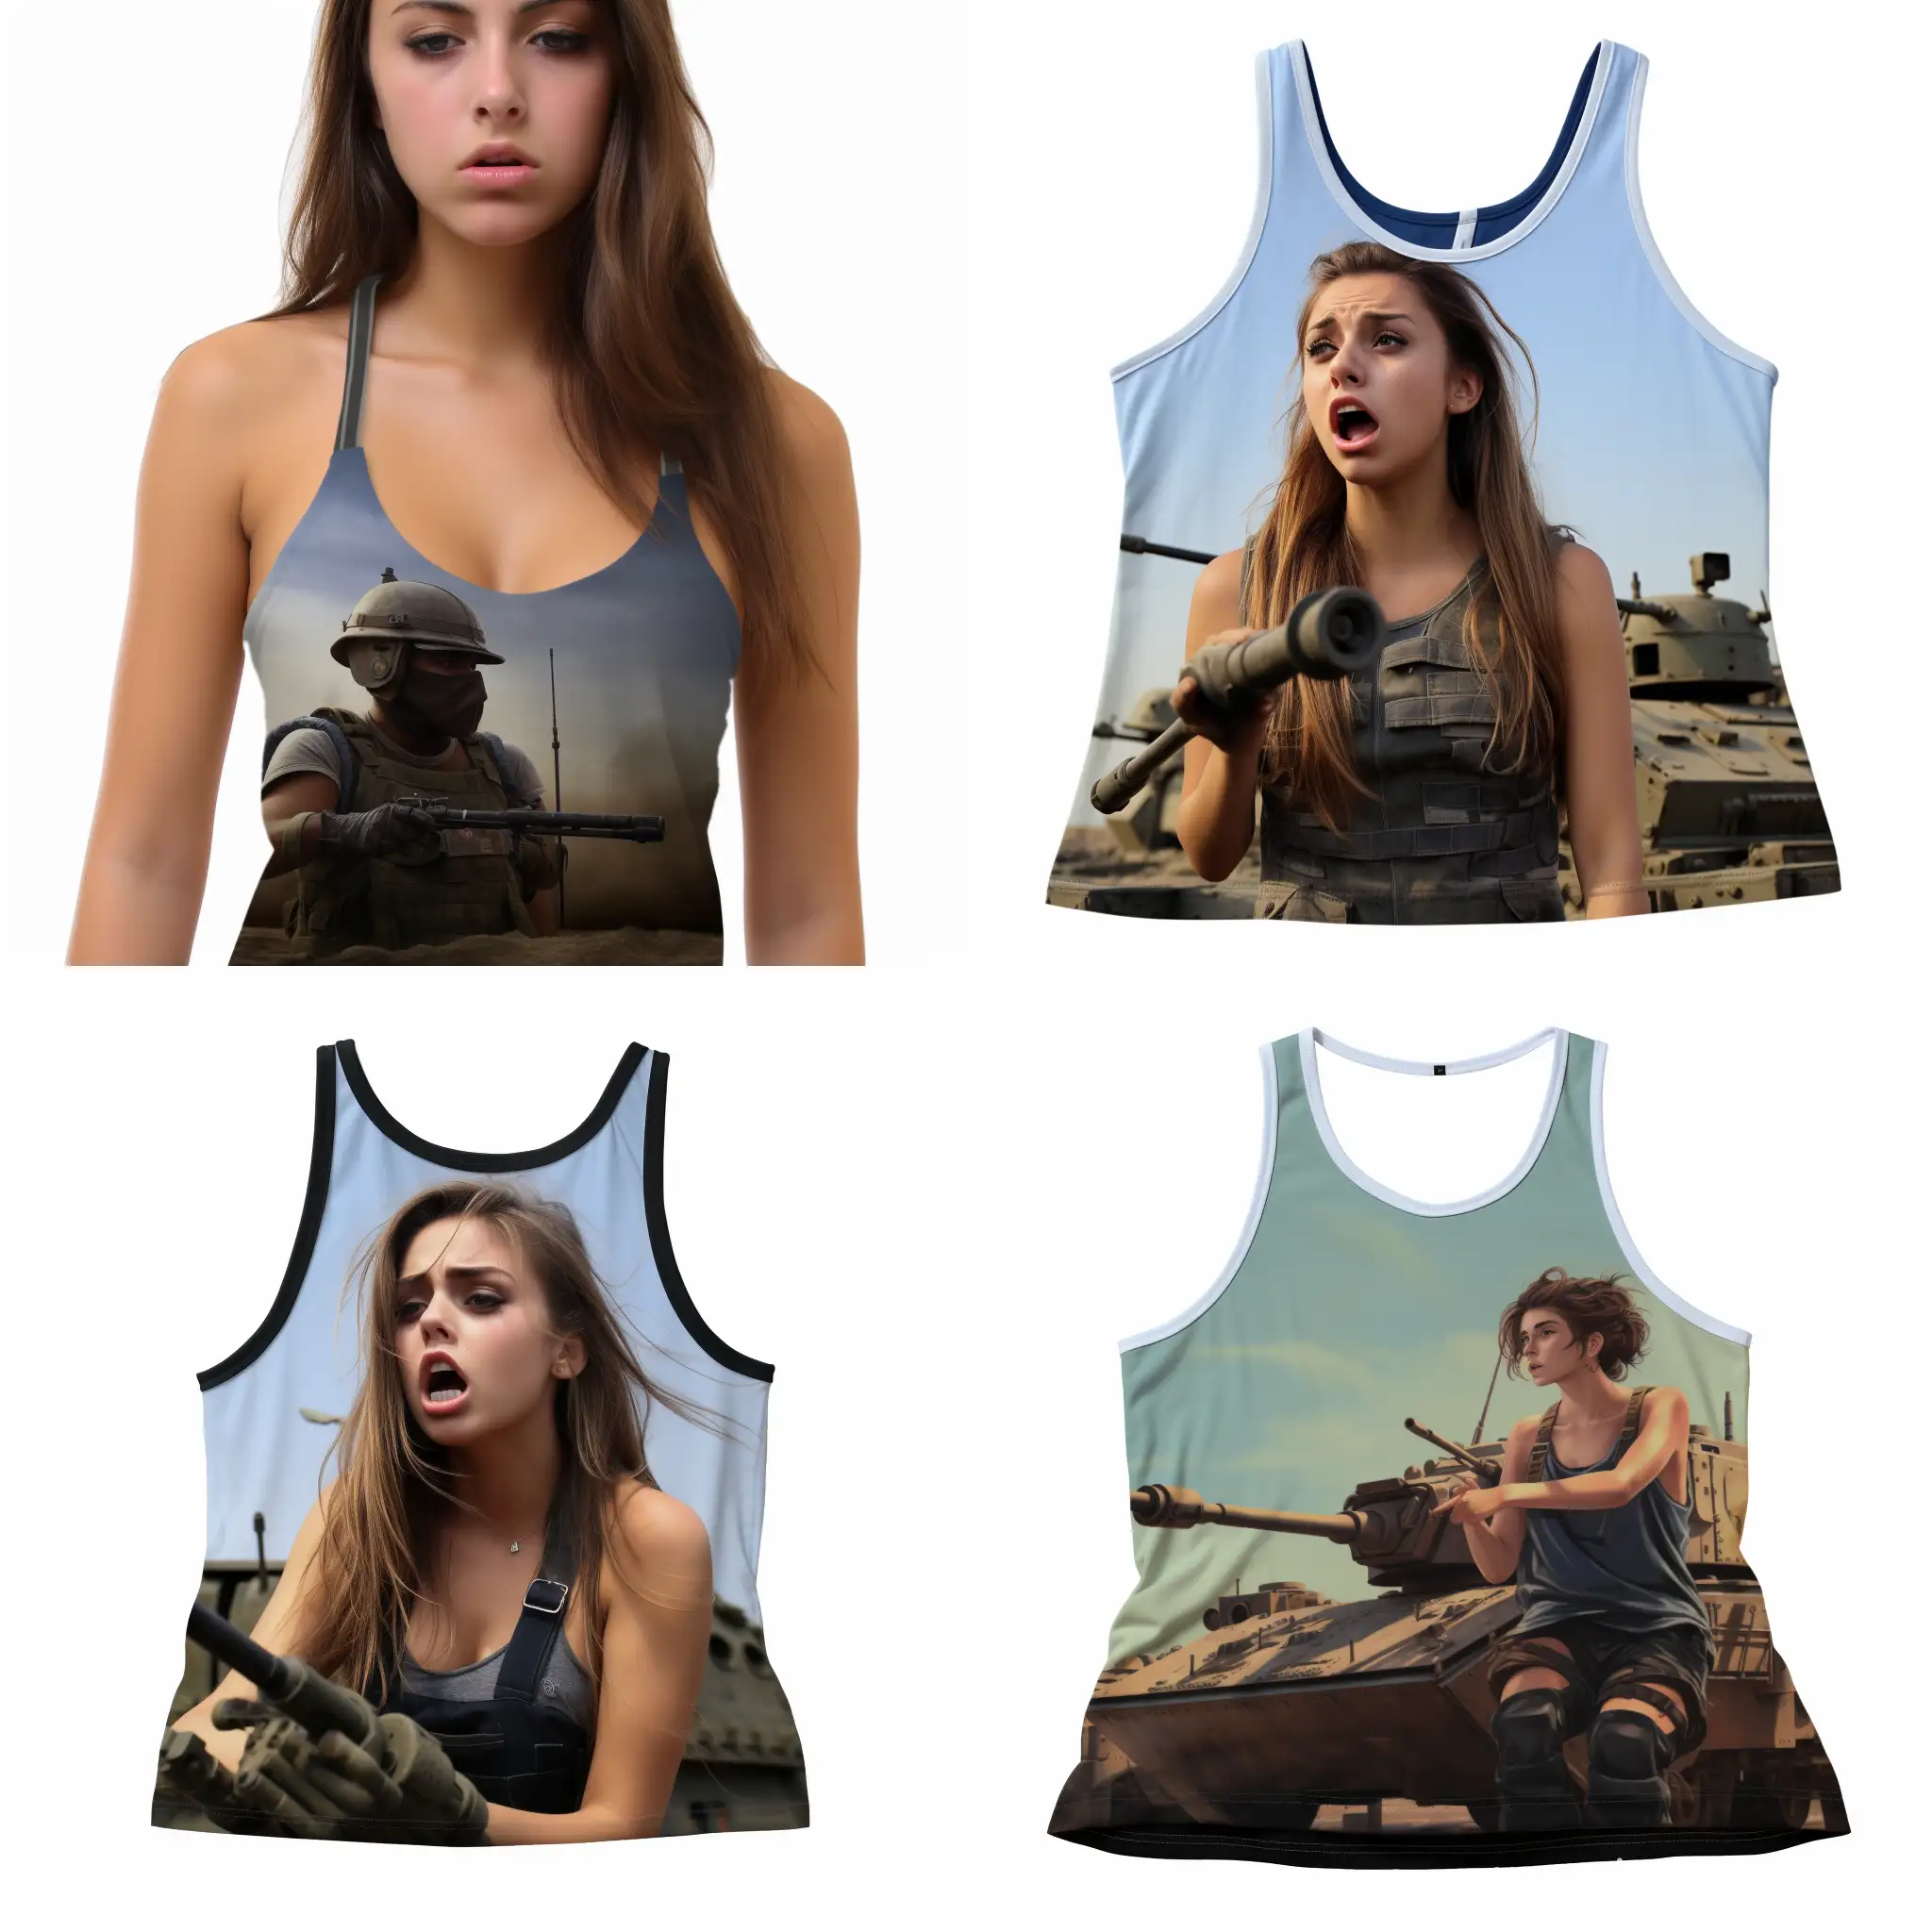 Beautiful teen italian soldier girls in tank top surrendering and scared